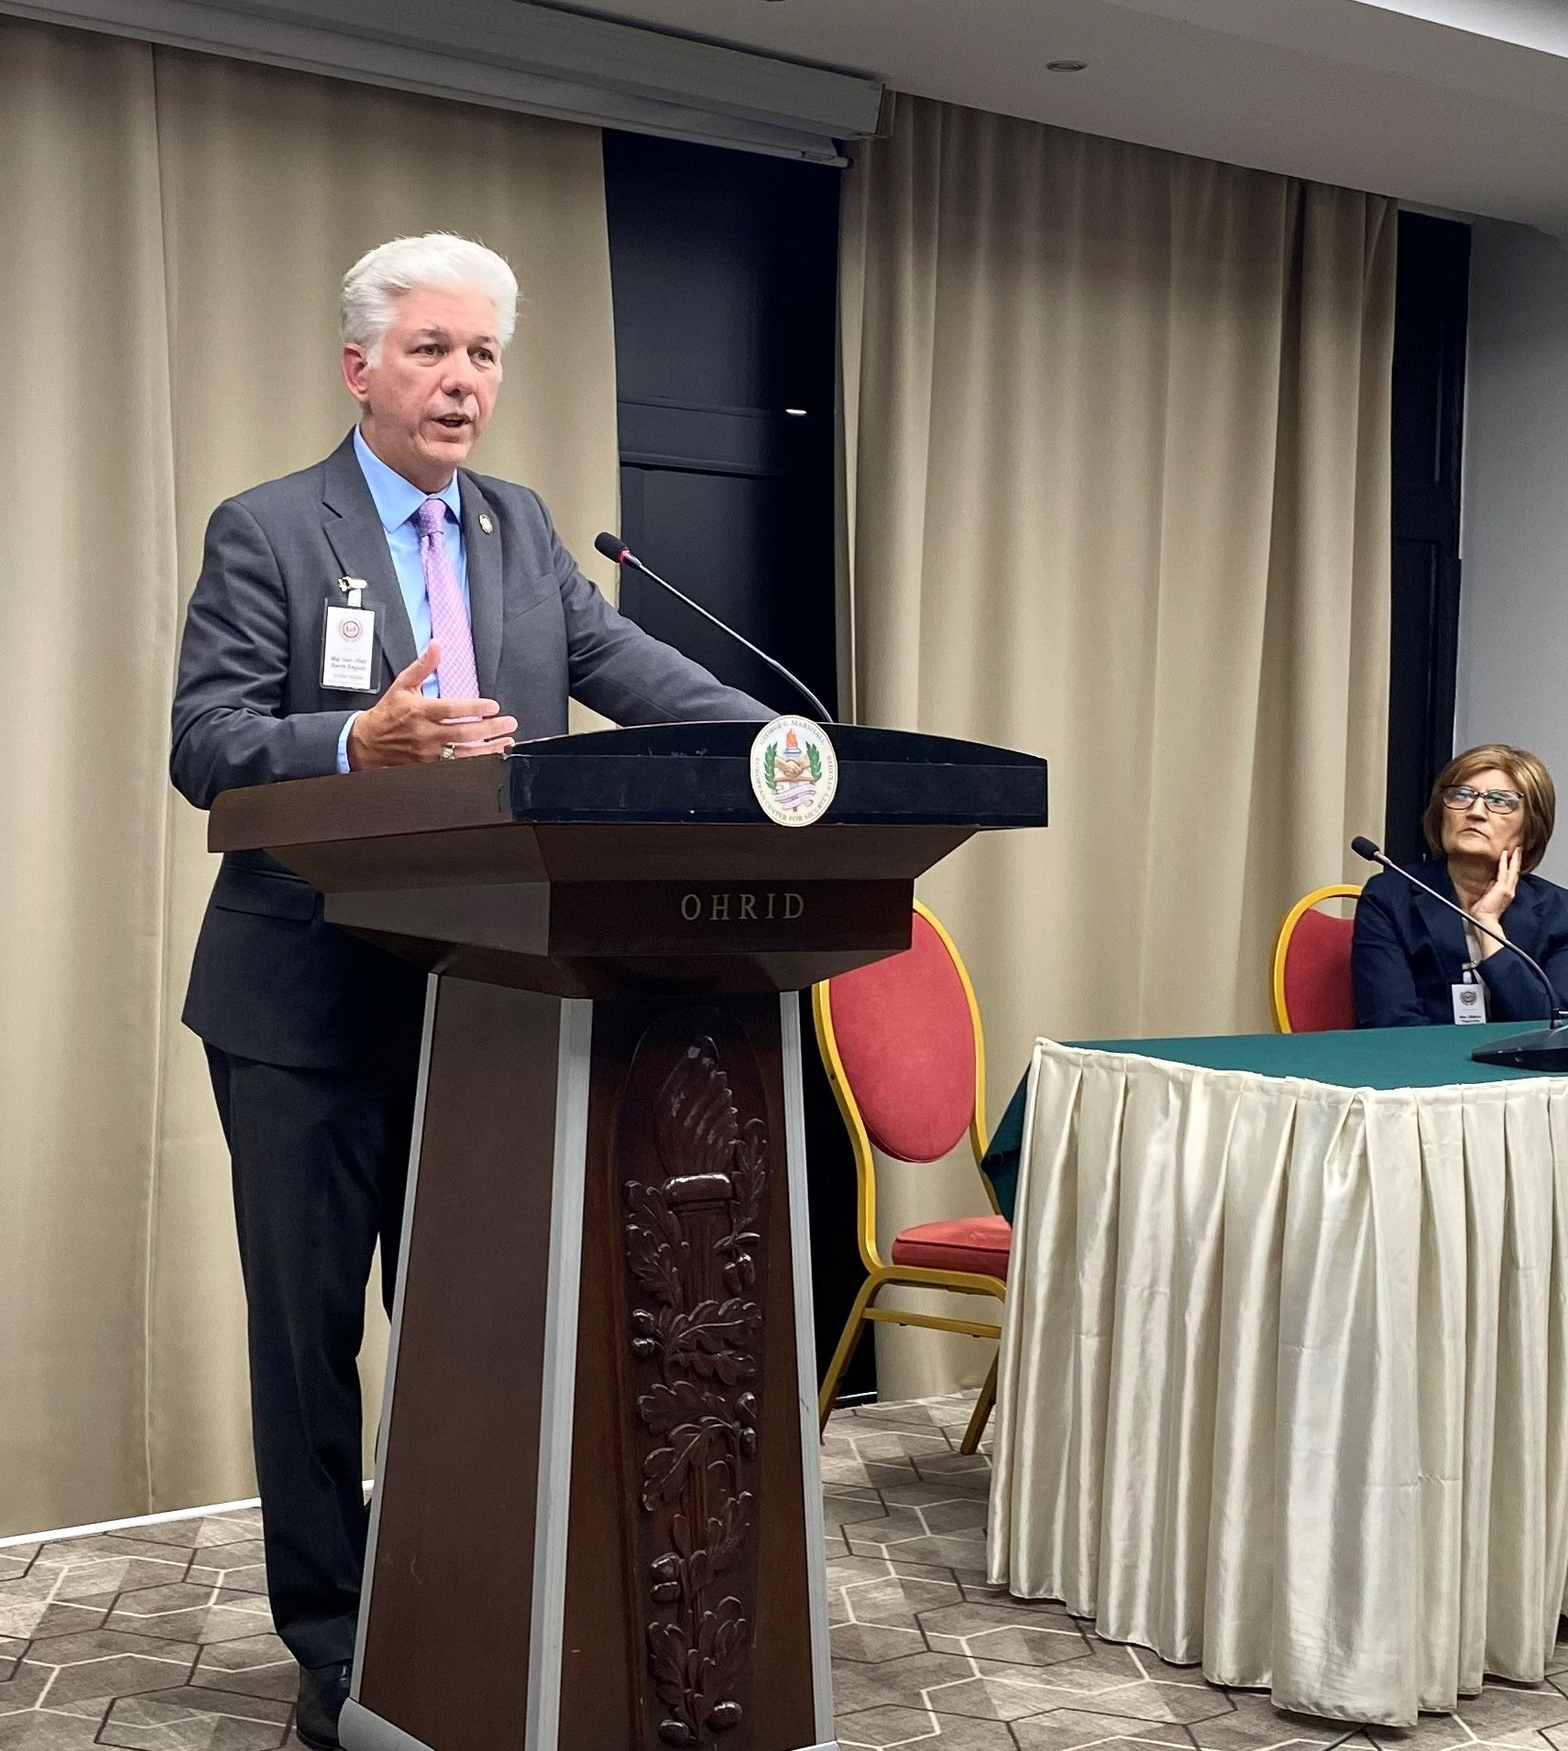 Barre Seguin speaks during the annual Ohrid Alumni Forum